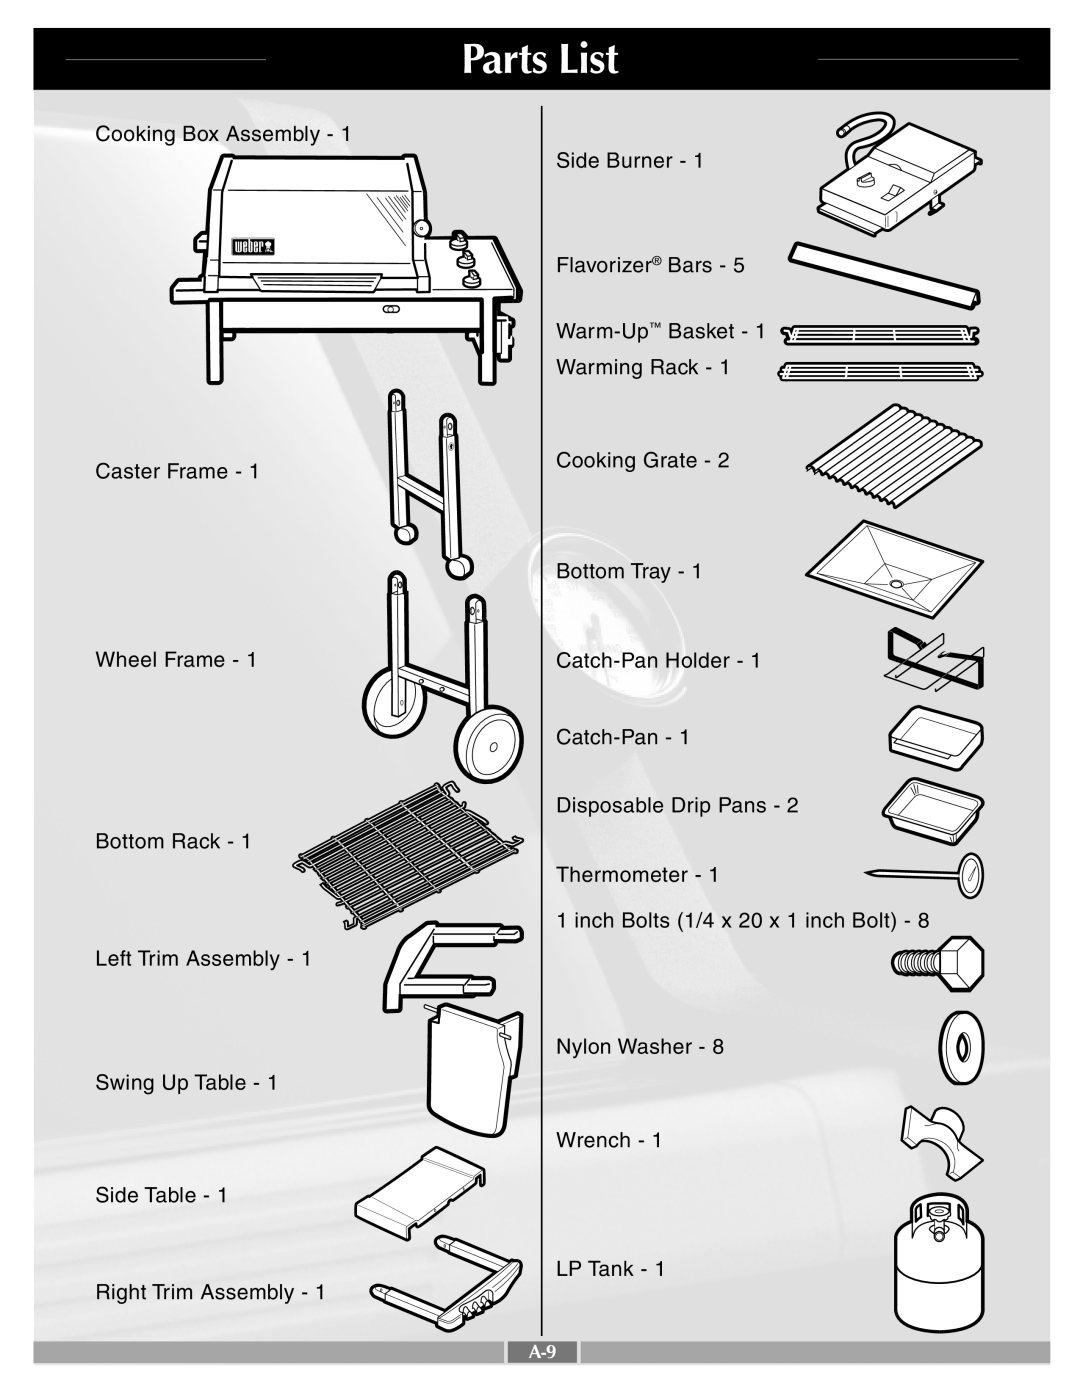 Weber 55249 manual Parts List, Cooking Box Assembly Caster Frame Wheel Frame Bottom Rack, Wrench LP Tank 